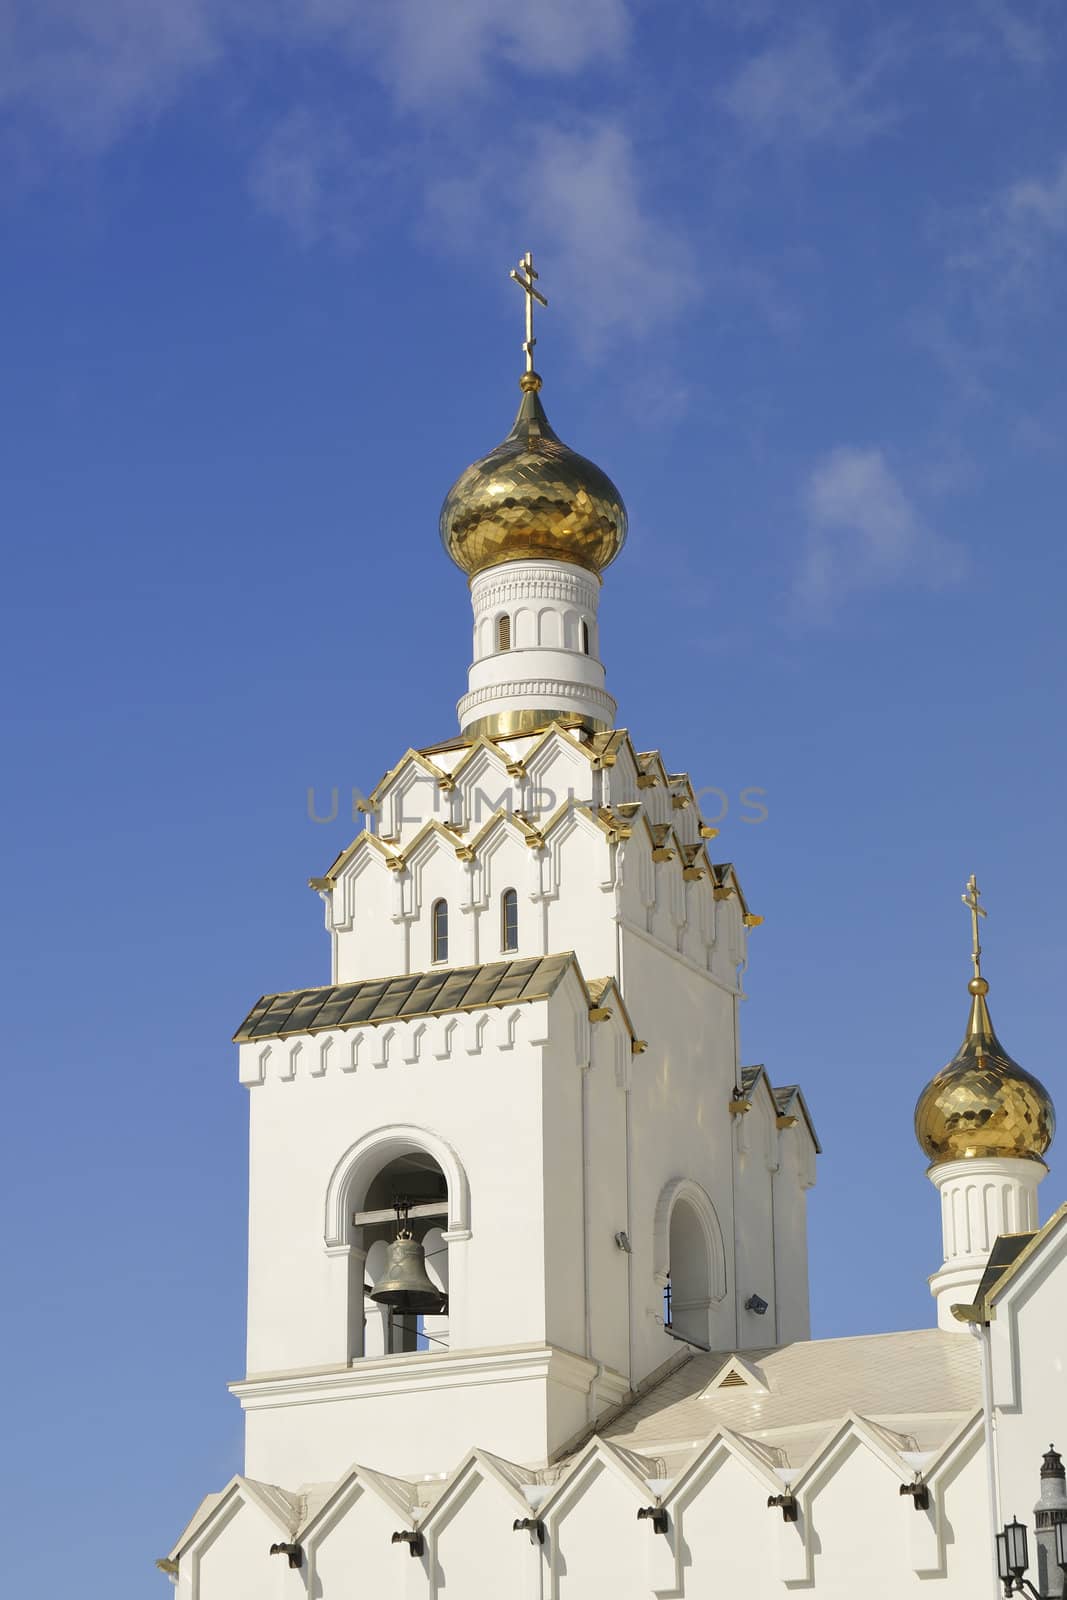 bright Orthodox Church under clear blue sky; All Saints orthodox Church in Minsk, Belarus